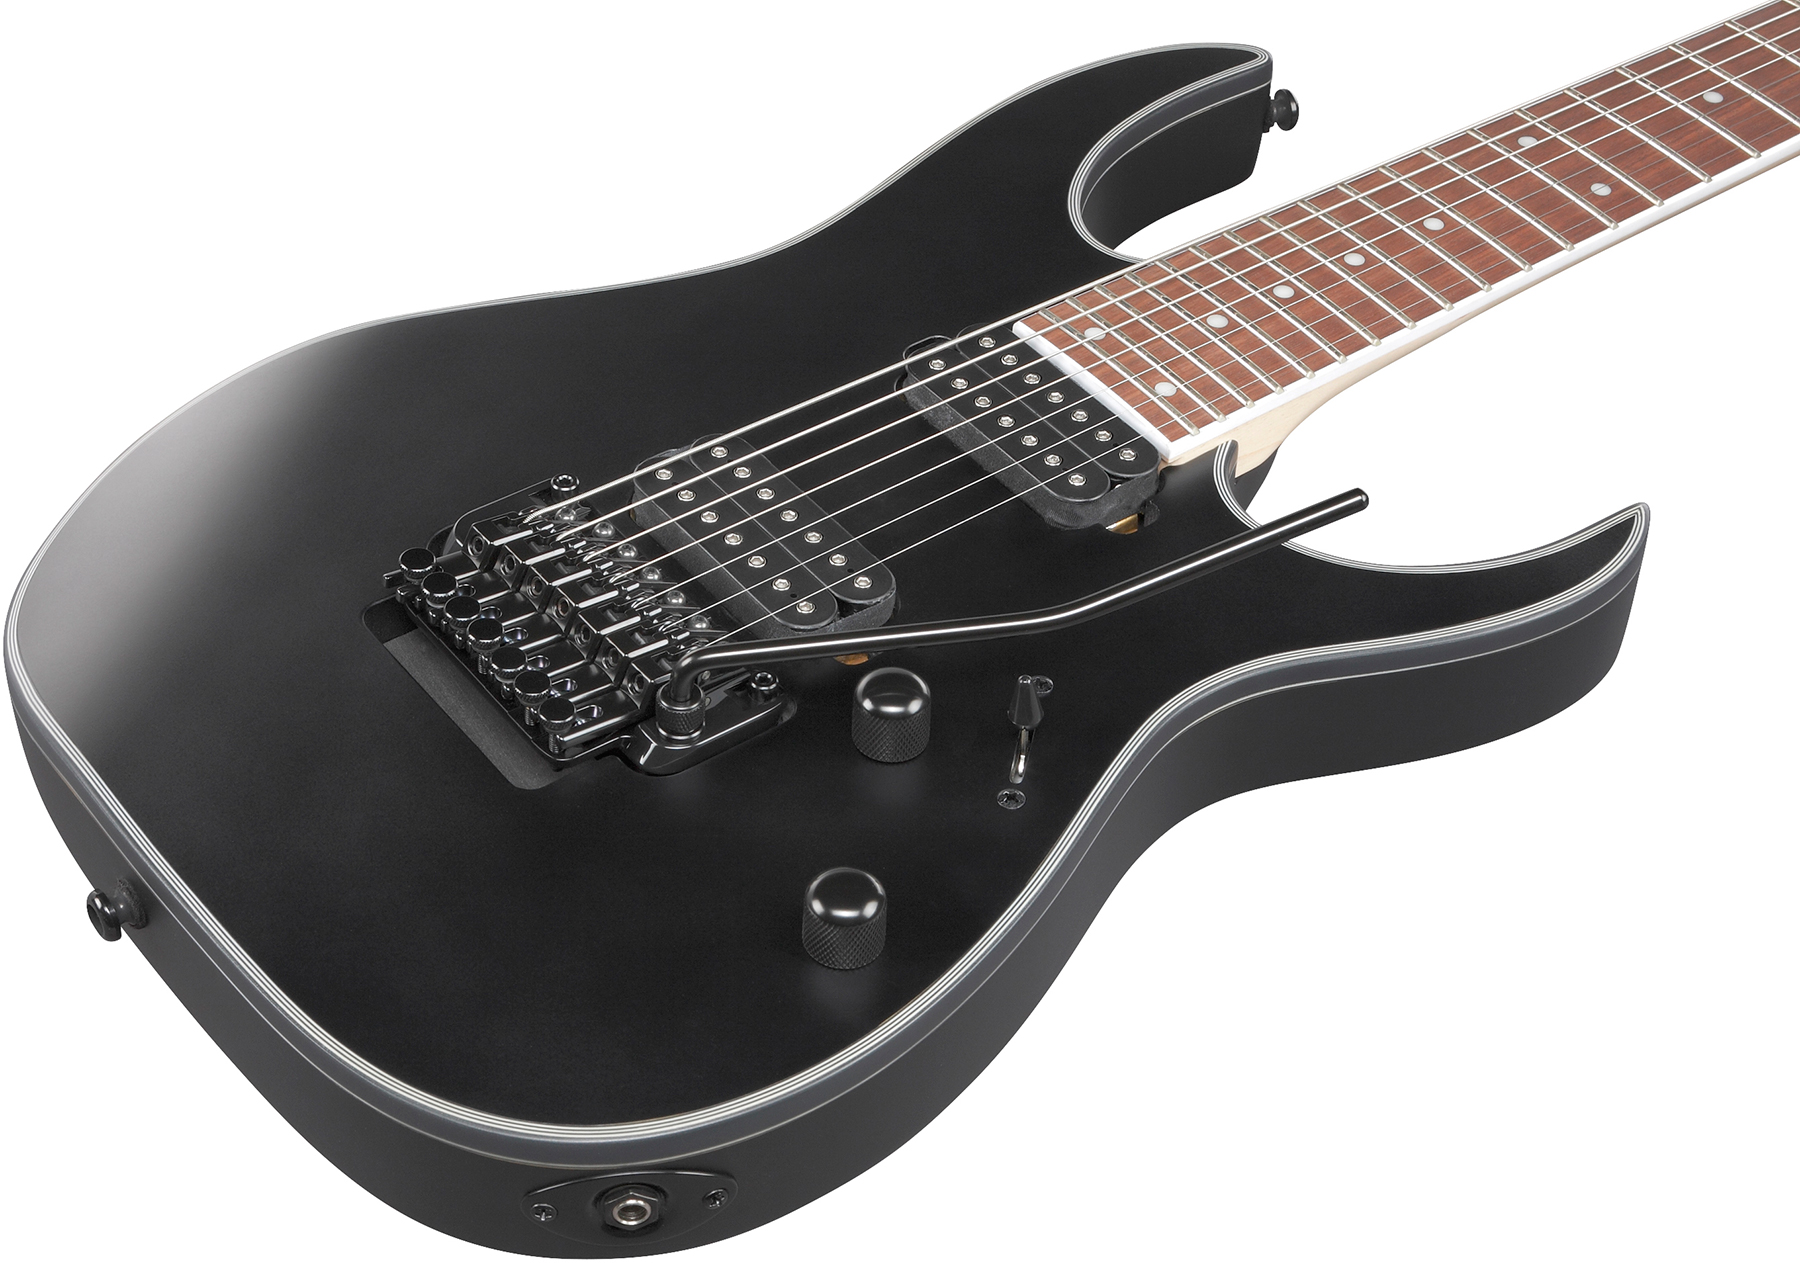 Ibanez Rg7320ex Bkf 7c 2h Fr Jat - Black Flat - Guitarra eléctrica de 7 cuerdas - Variation 2